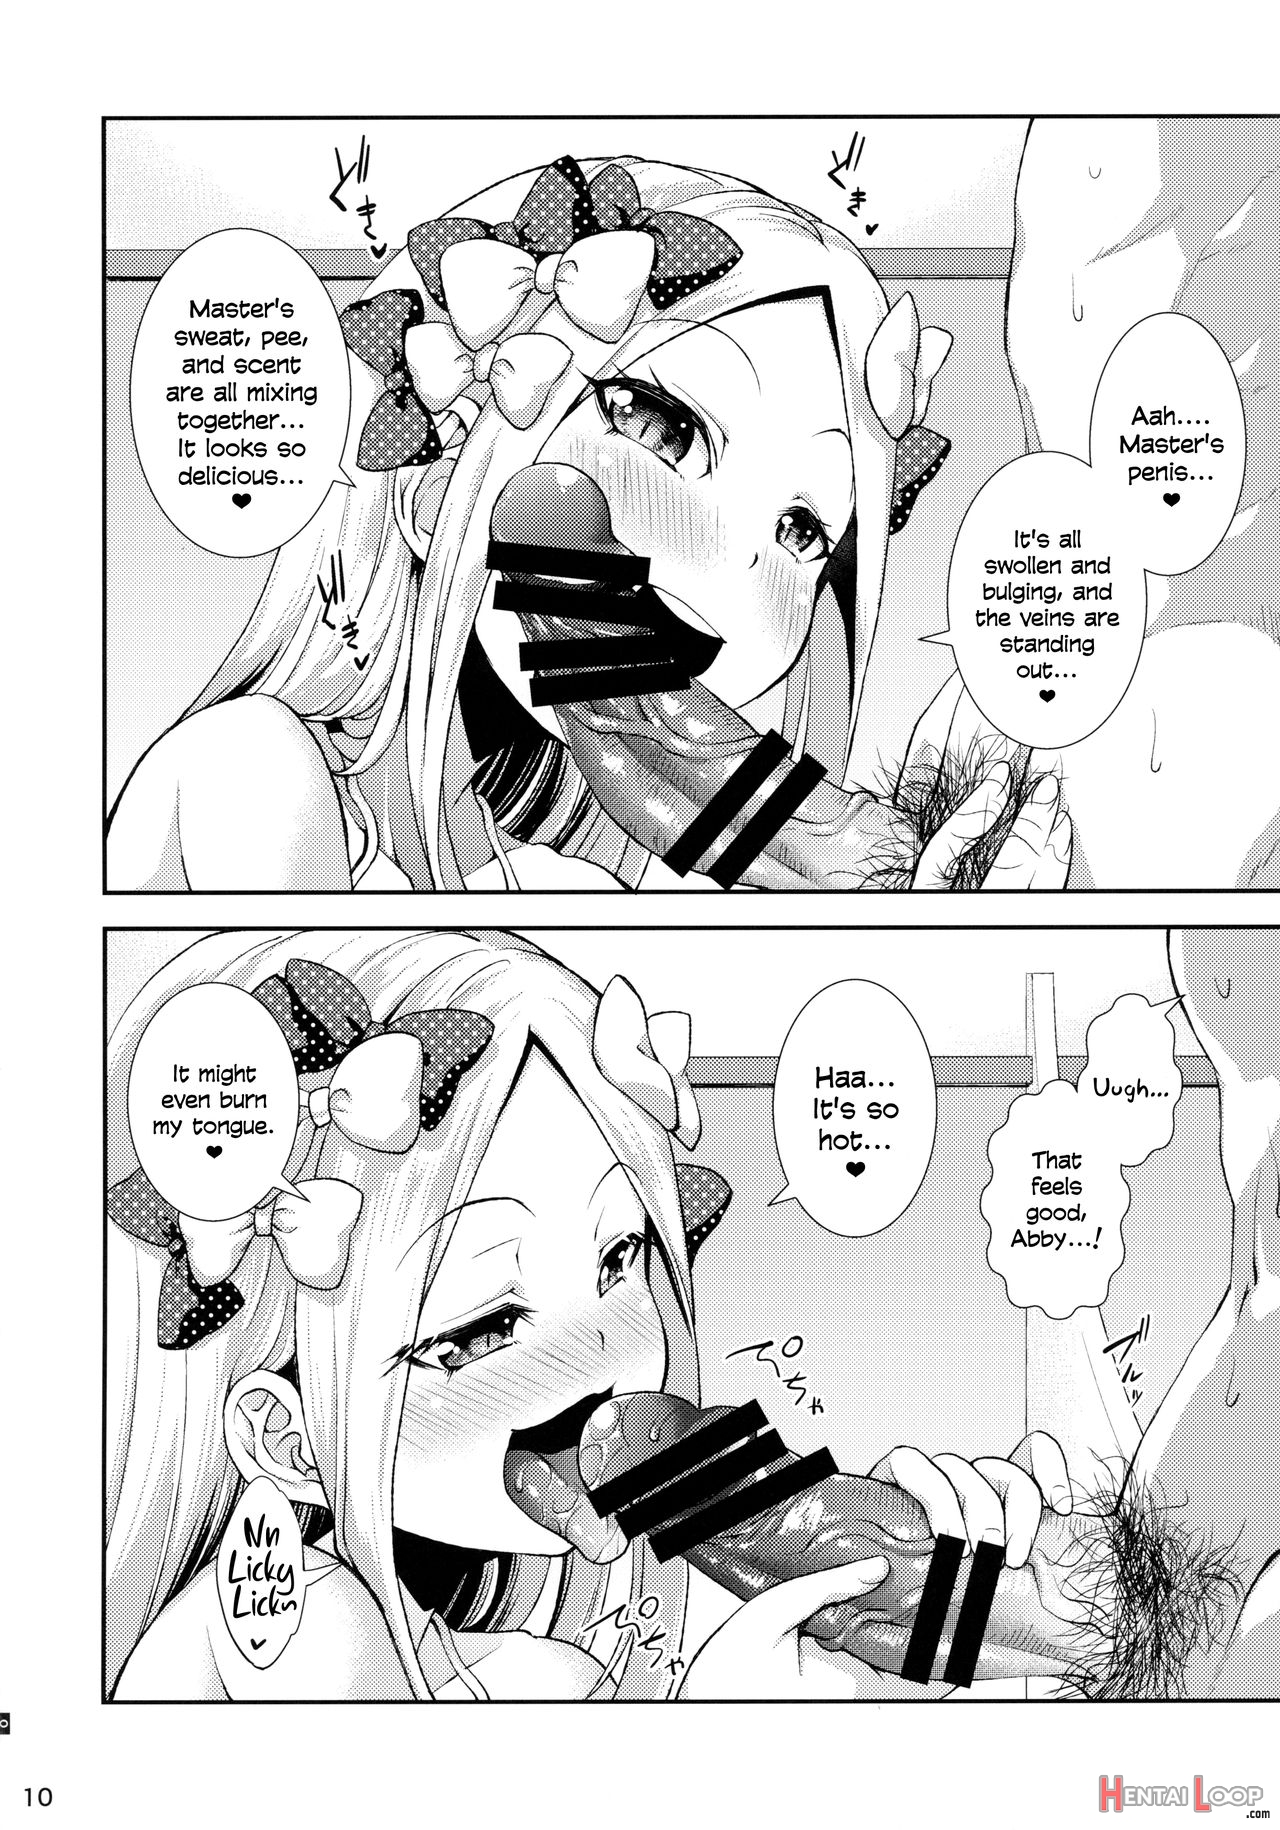 Page 8 of Abby And The Secret Homemade Sex Tape (by Yamazaki Kana)